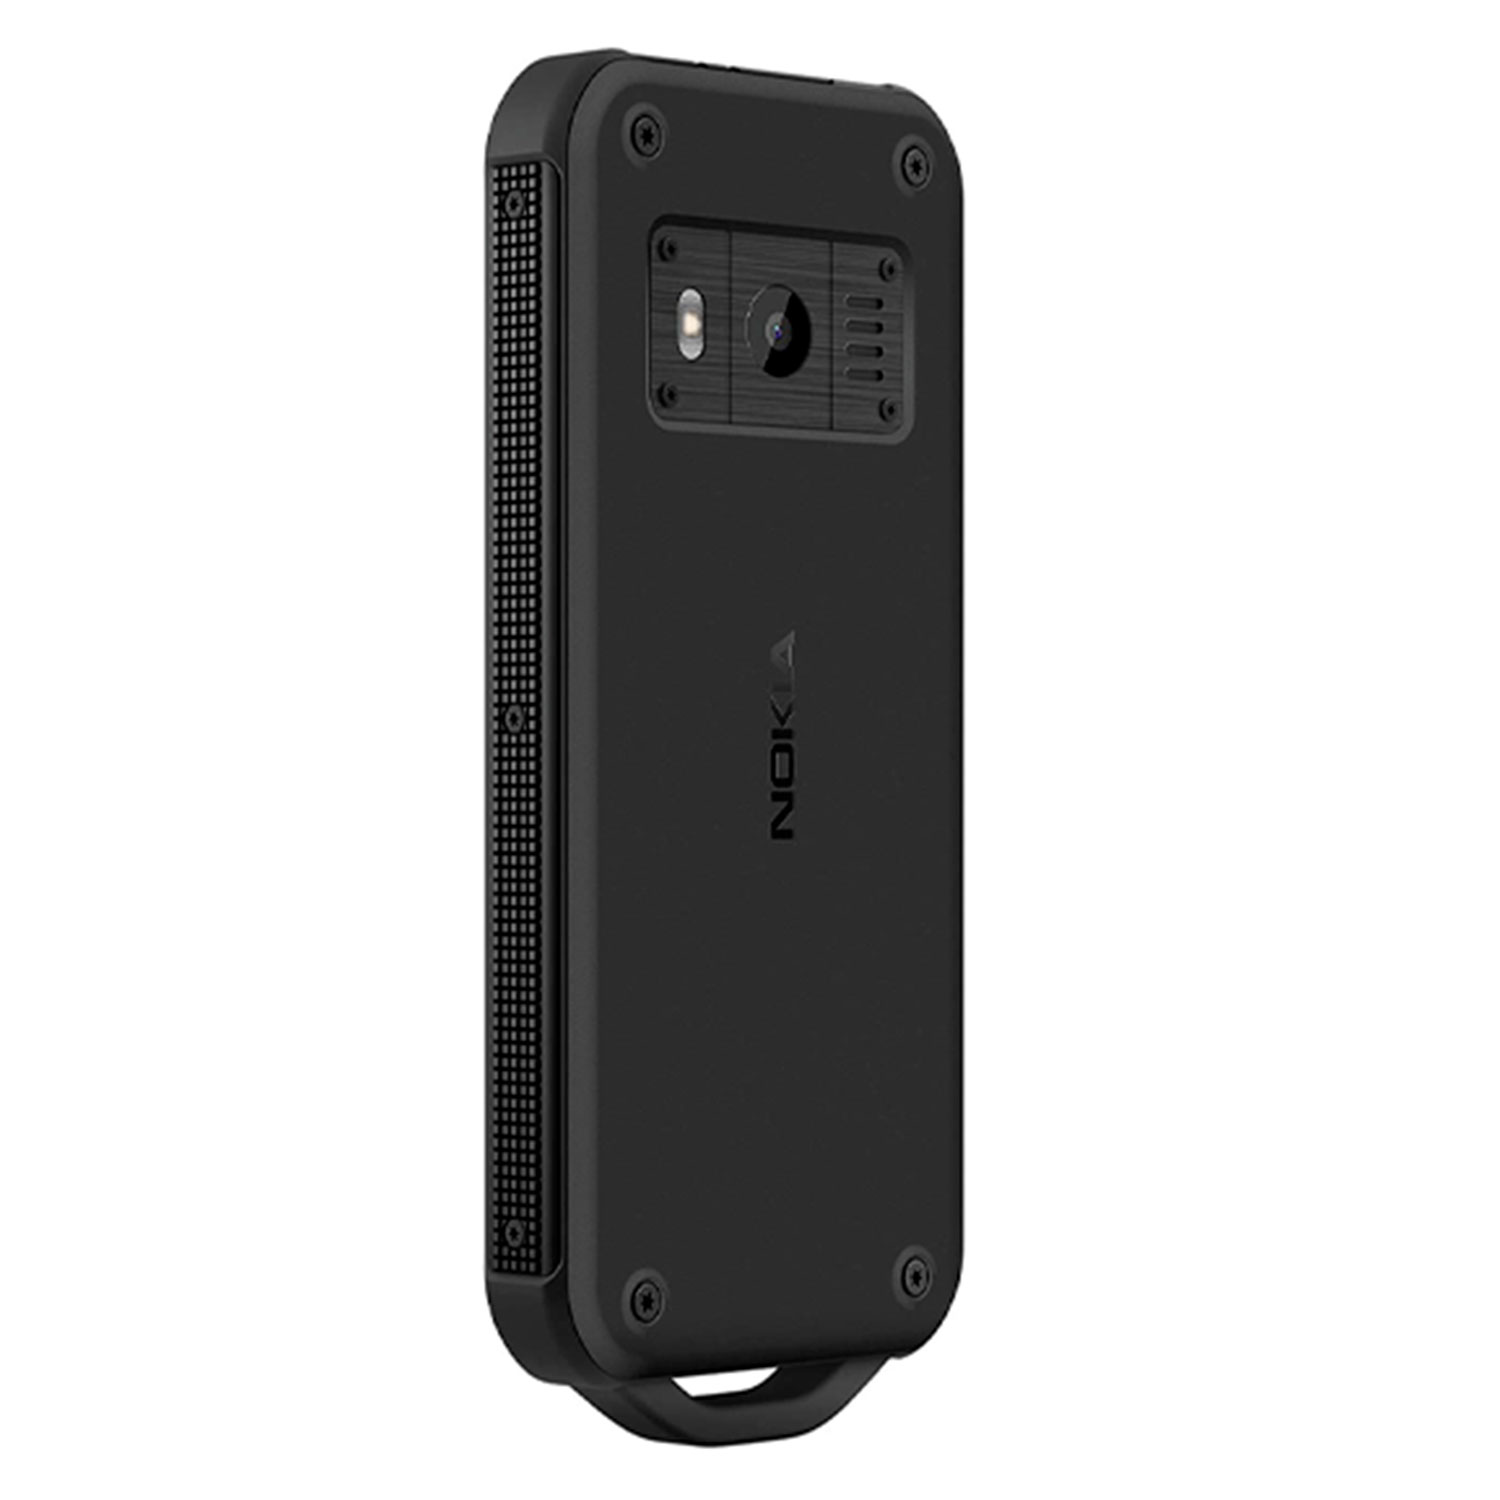 Celular Nokia 800 TA-1189 4GB 512MB RAM Dual SIM Tela 2.4" - Preto
